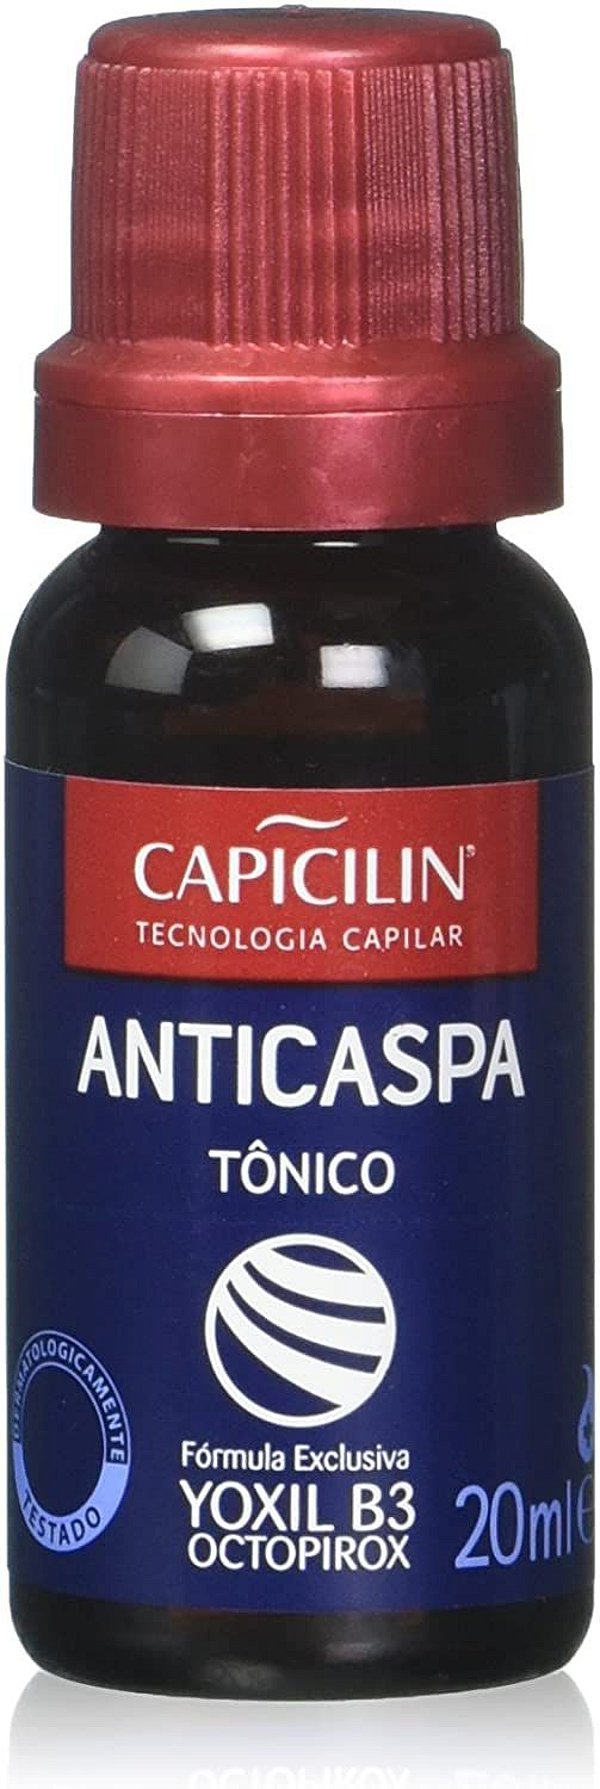 Capicilin Tônico Capilar Anticaspa 20ml